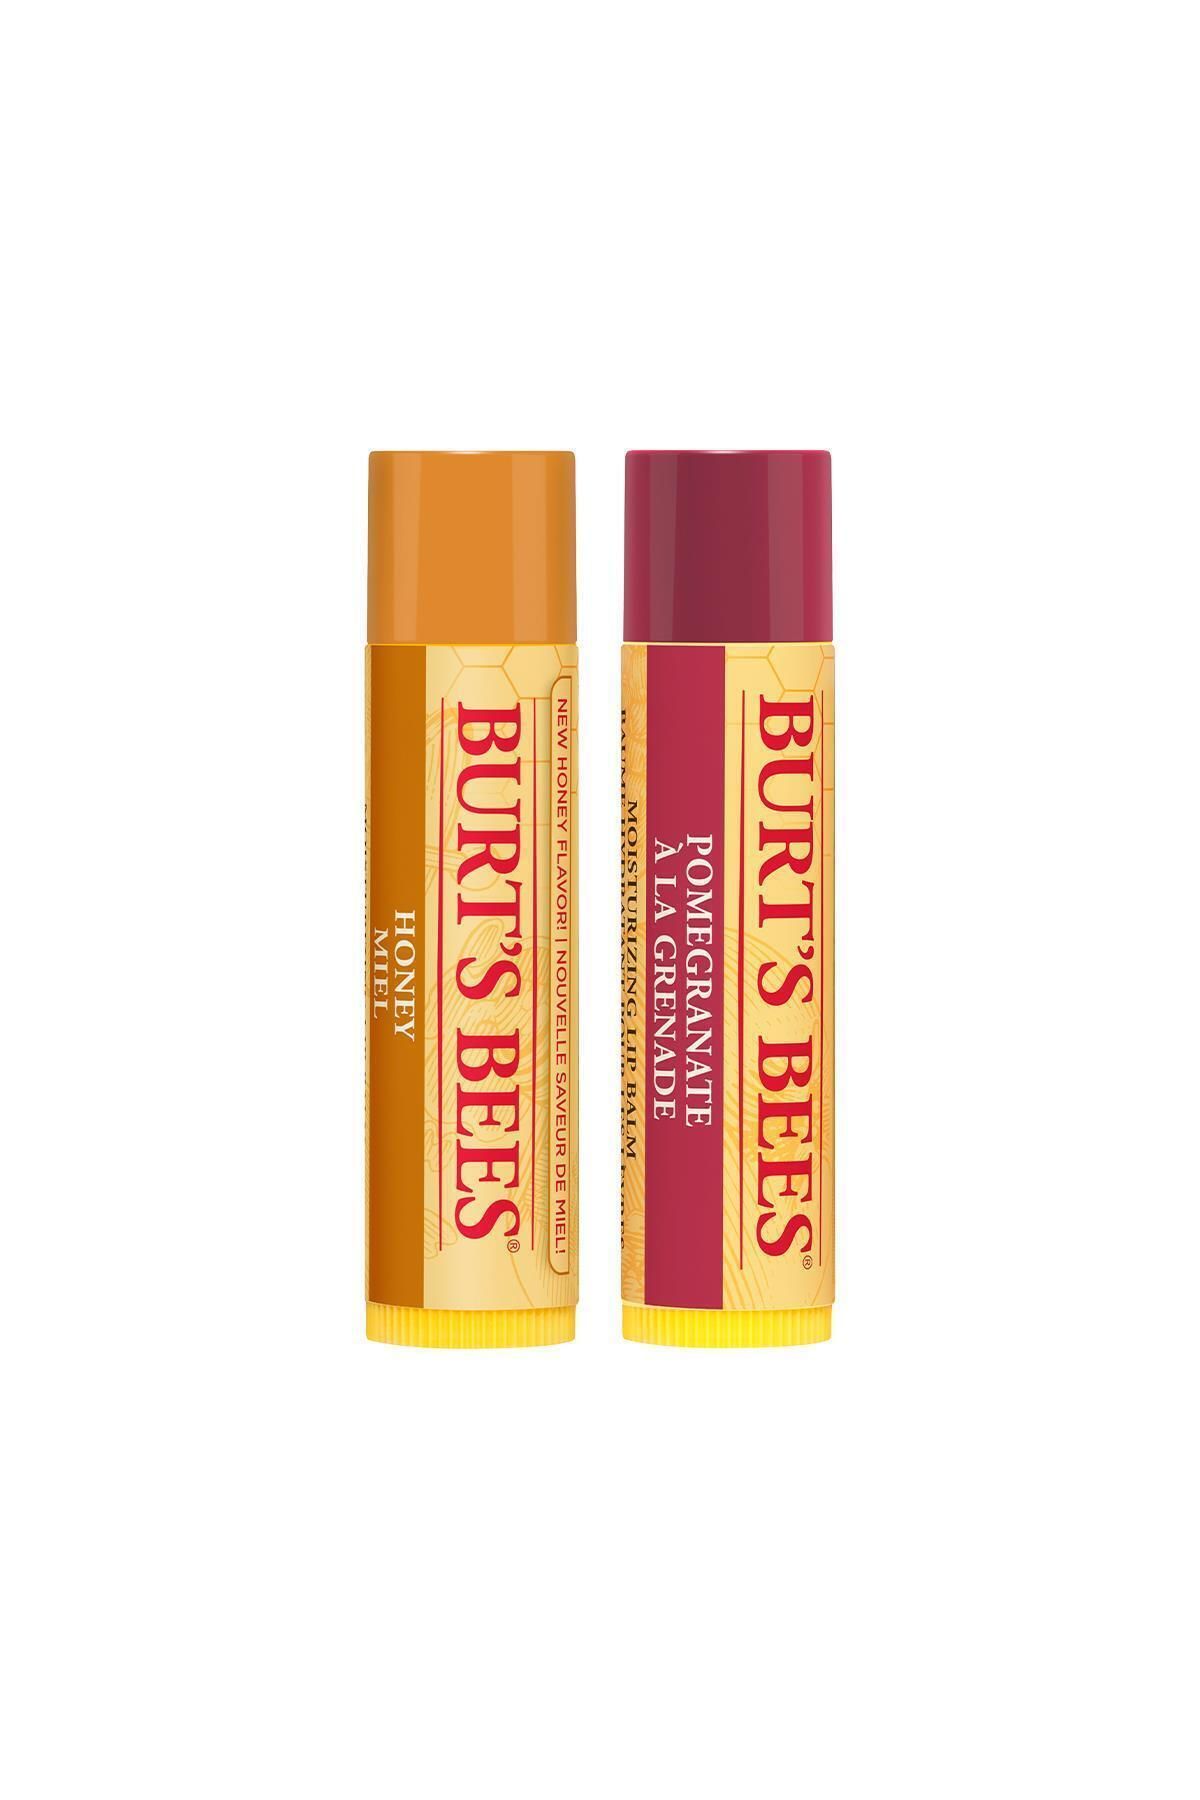 Burt's Bees Honey Lip Balm + Pomegranate Lip Balm Avantaj Set